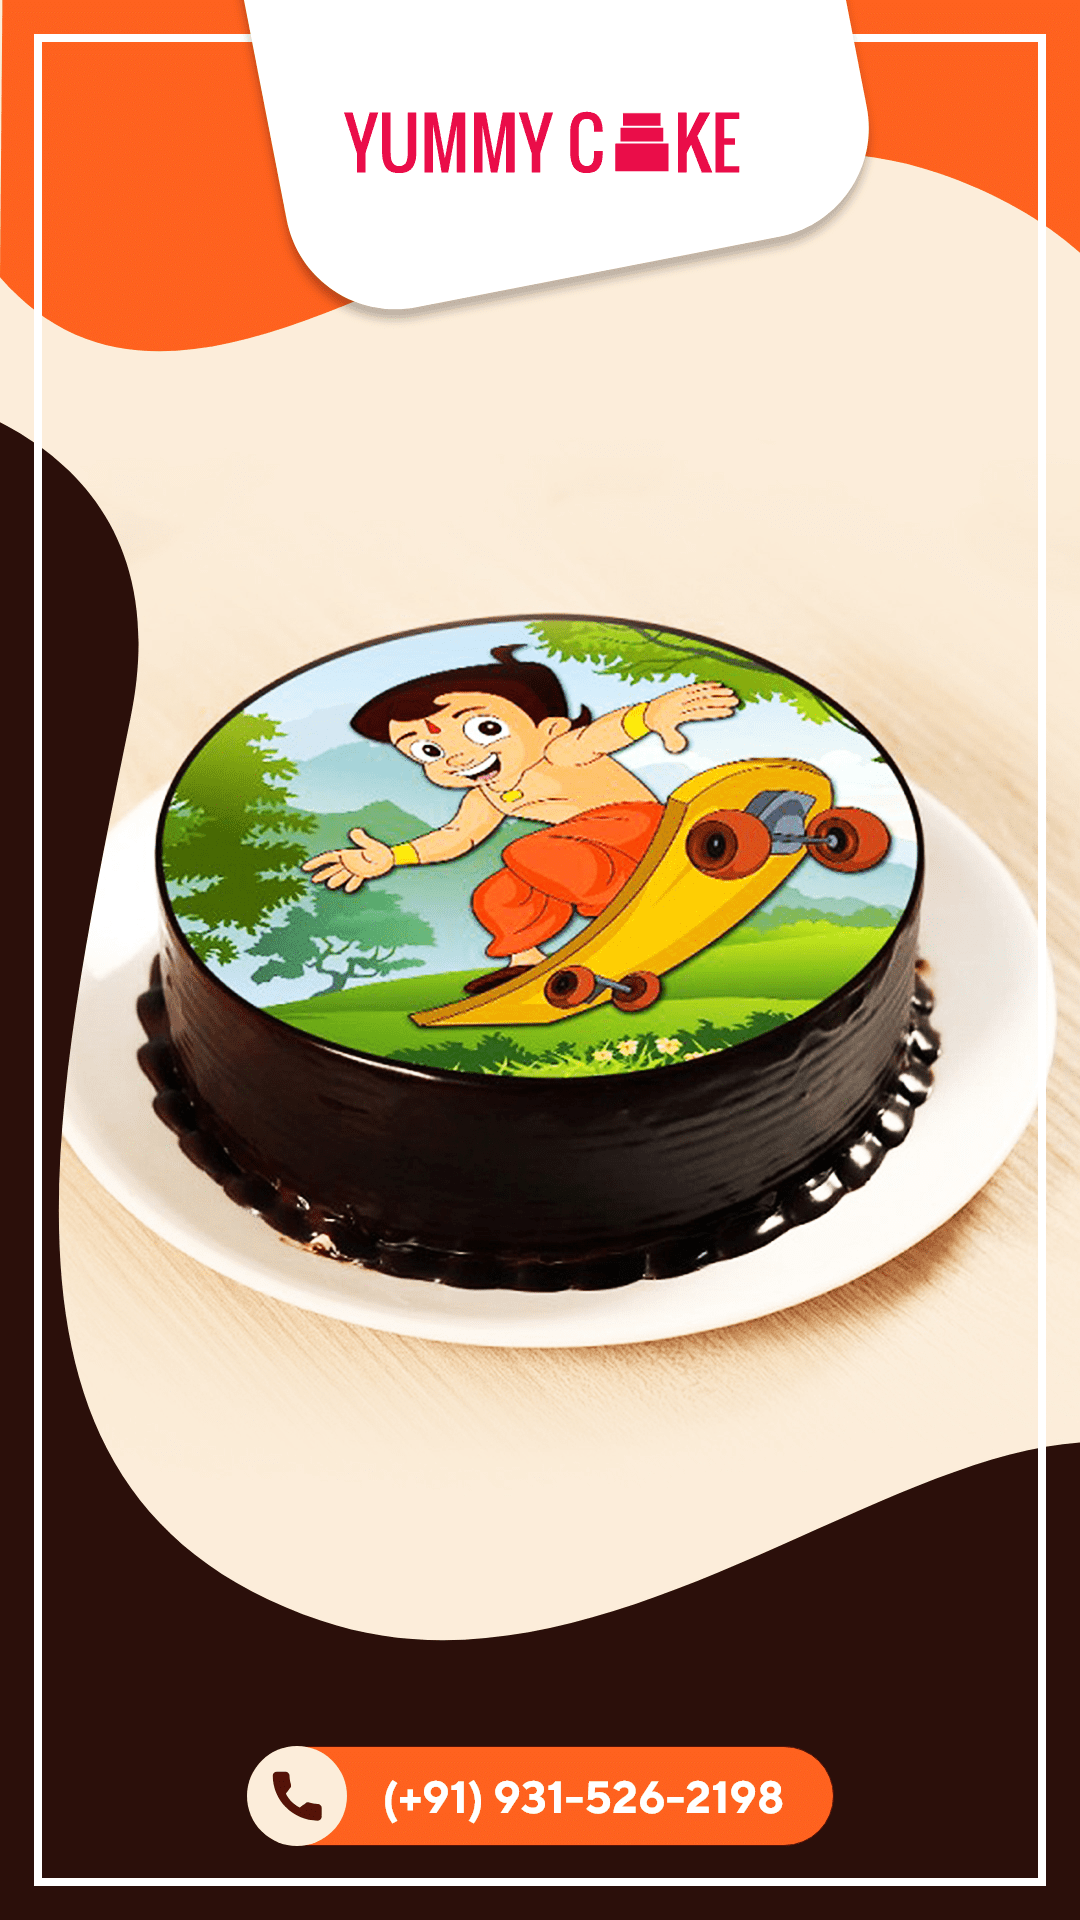 Egg-less chhota bheem cartoon cake delivery in Delhi and Noida